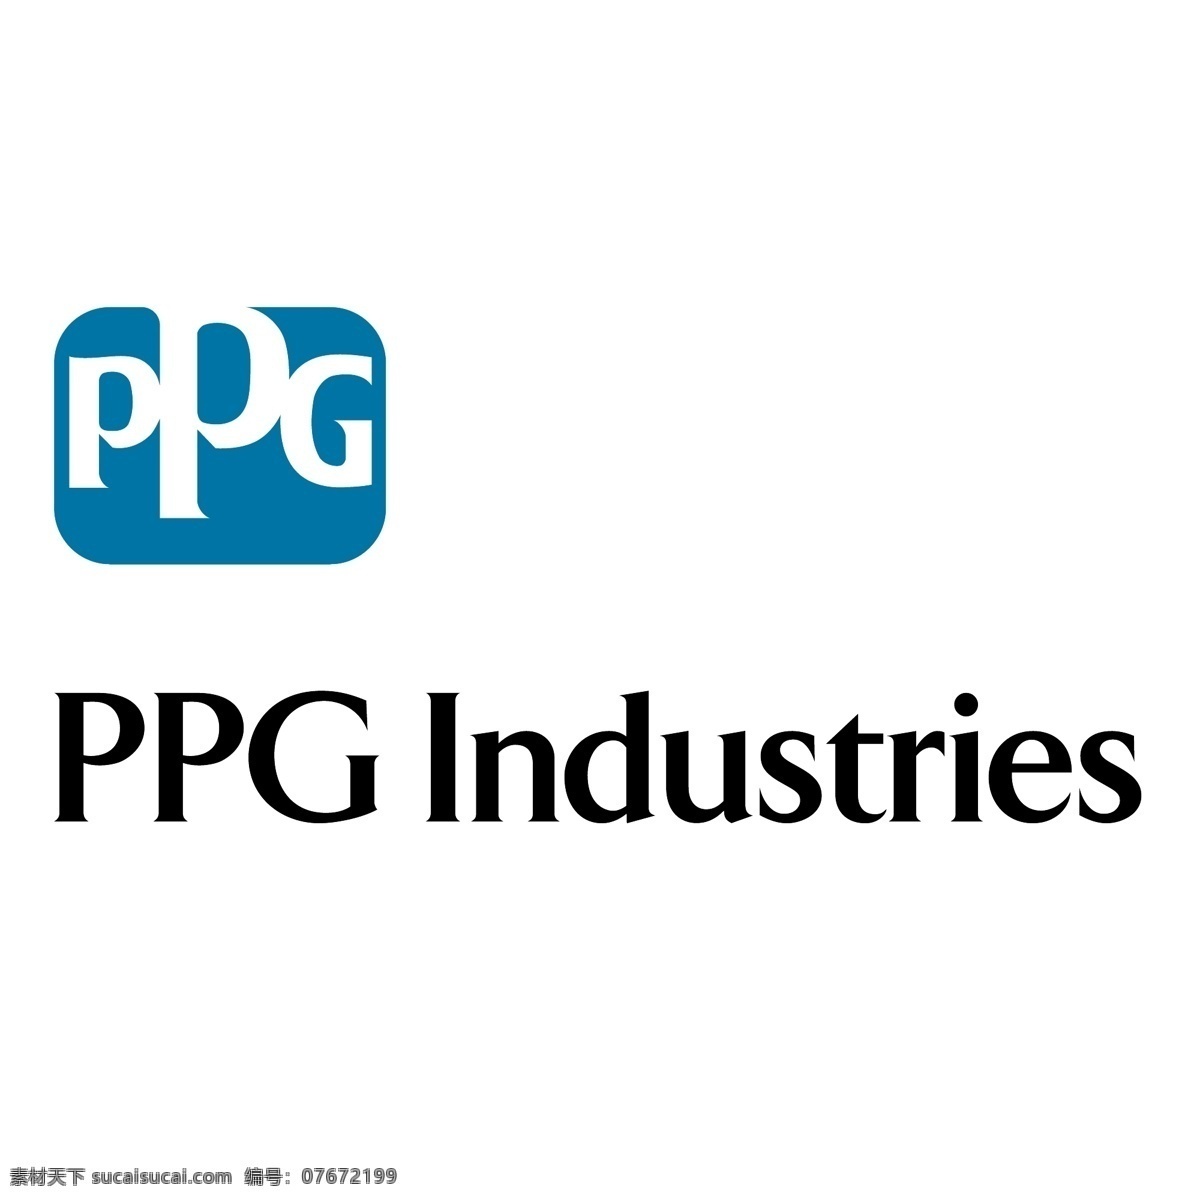 ppg 工业 公司 产业 行业 自由 ppg工业 矢量 产业载体 免费下载行业 载体 免费 图形